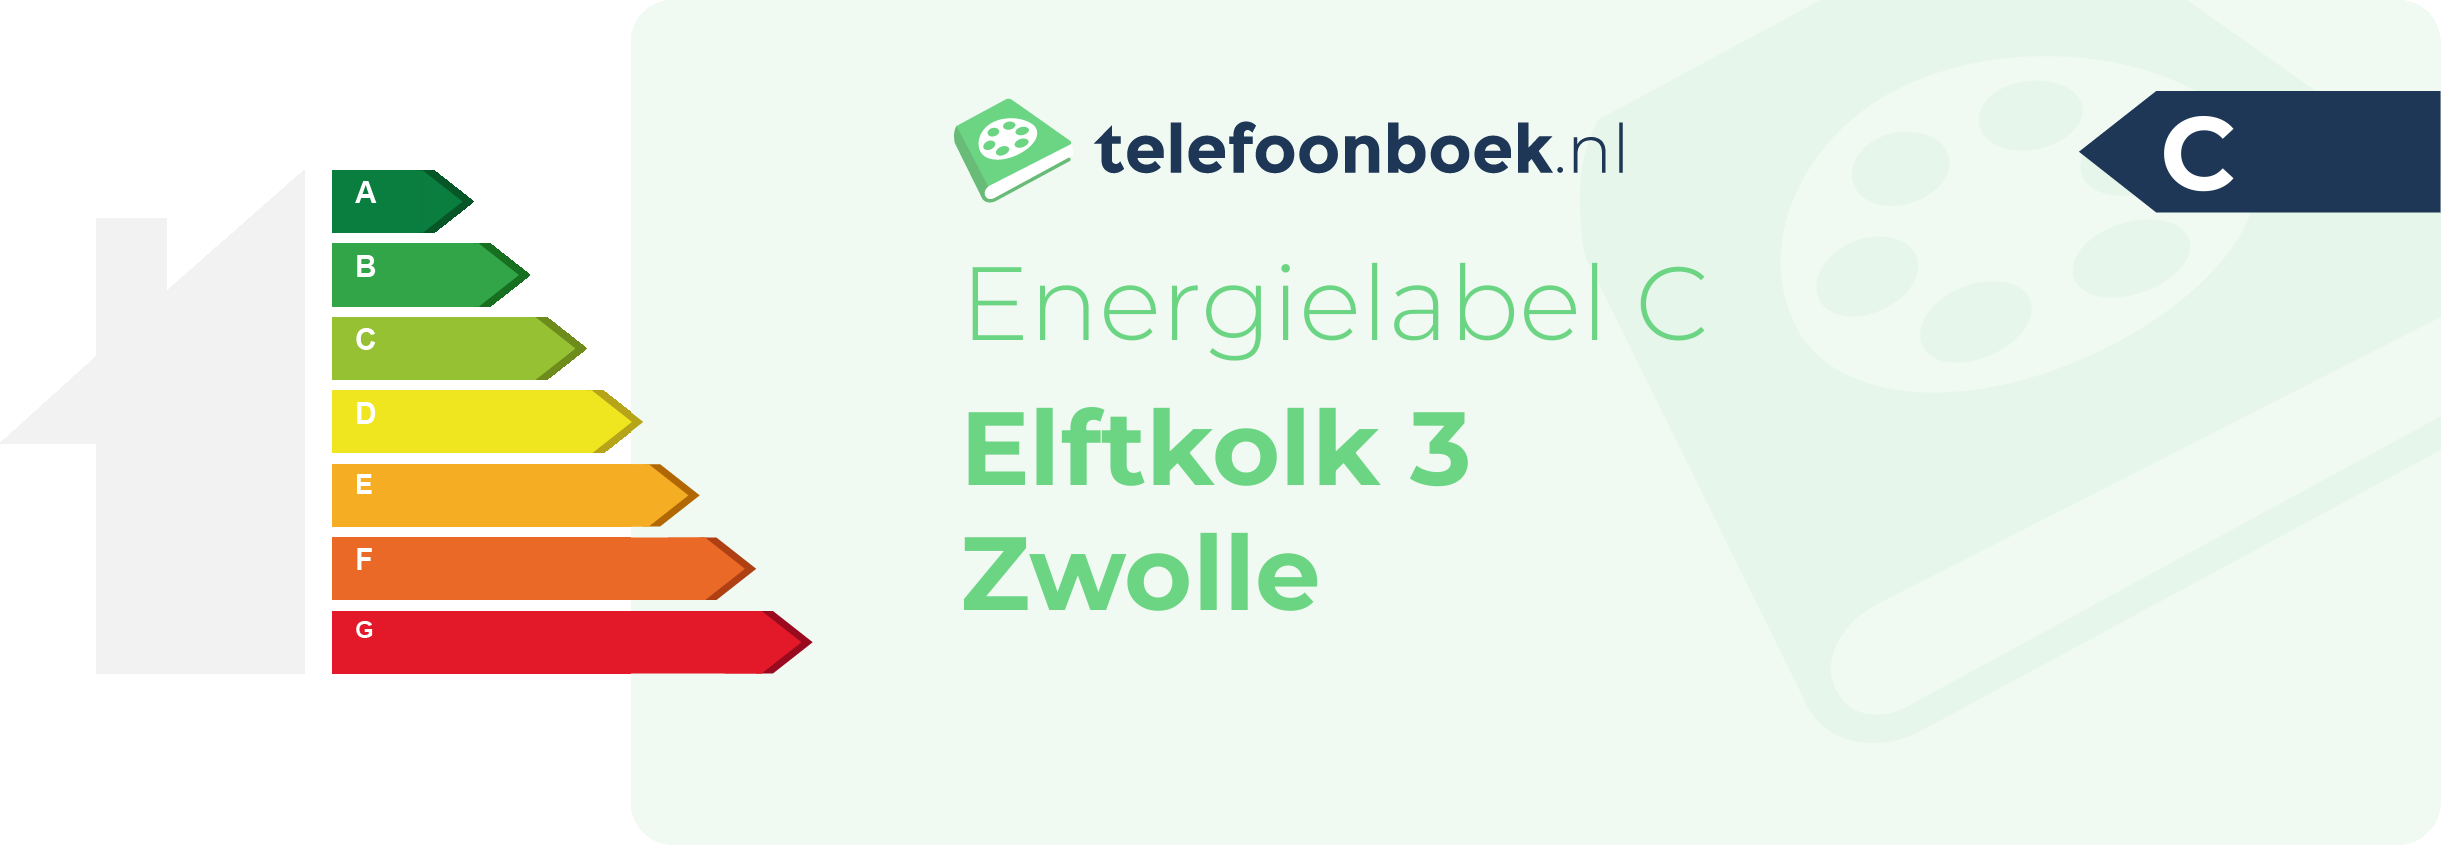 Energielabel Elftkolk 3 Zwolle